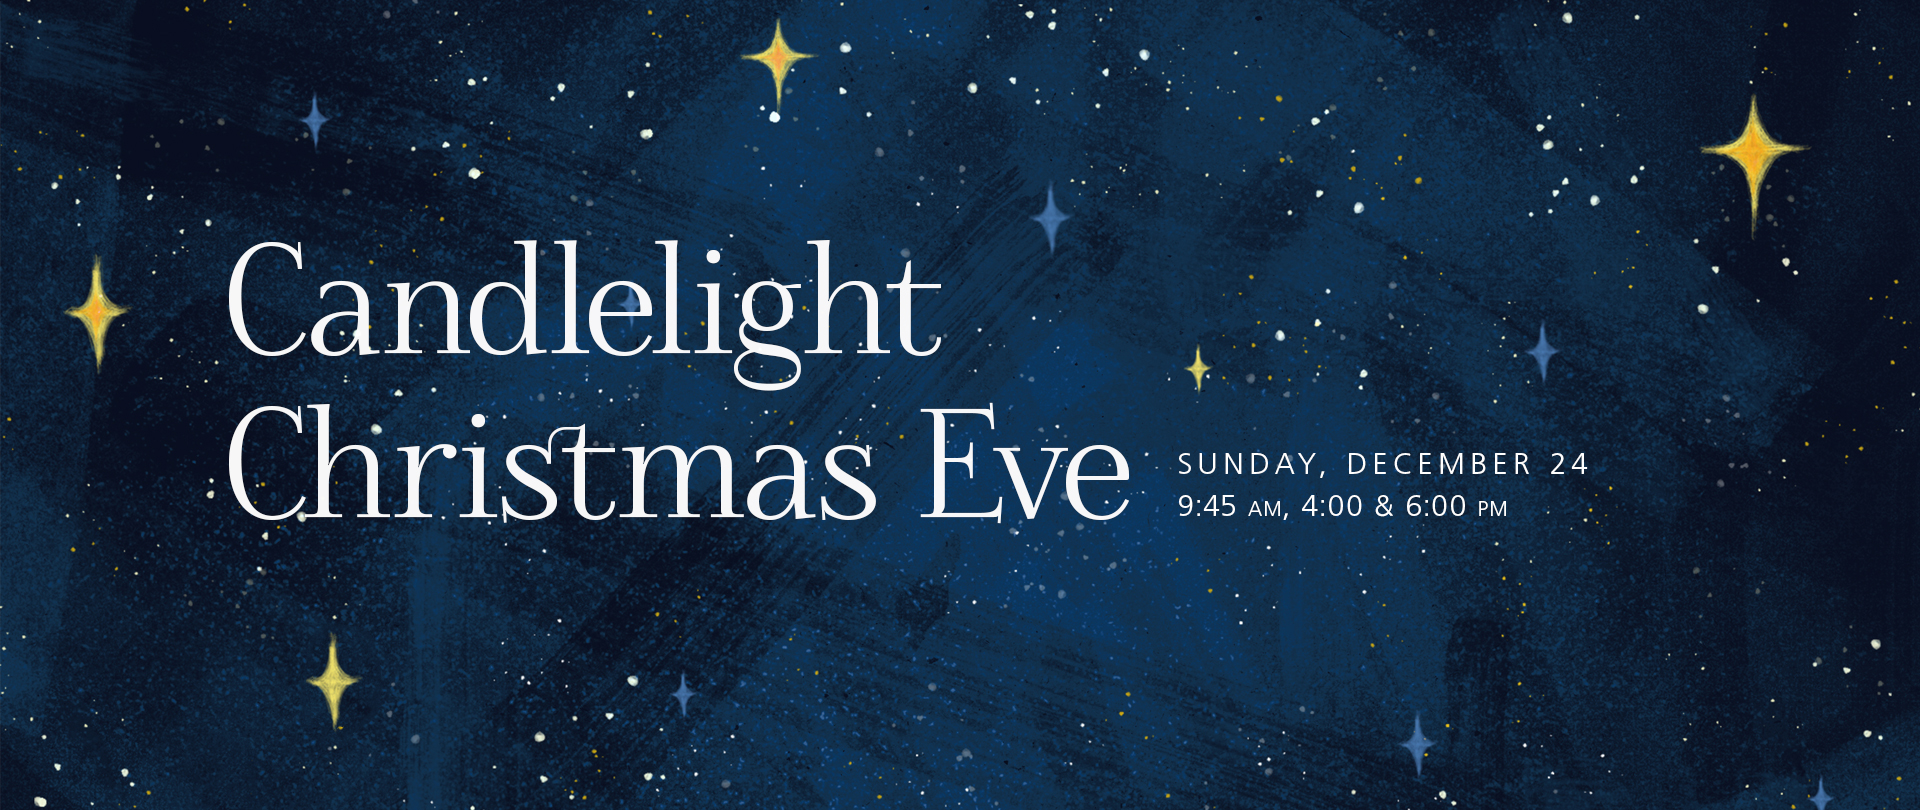 Candlelight Christmas Eve
Sunday, December 24
Watch Again!
